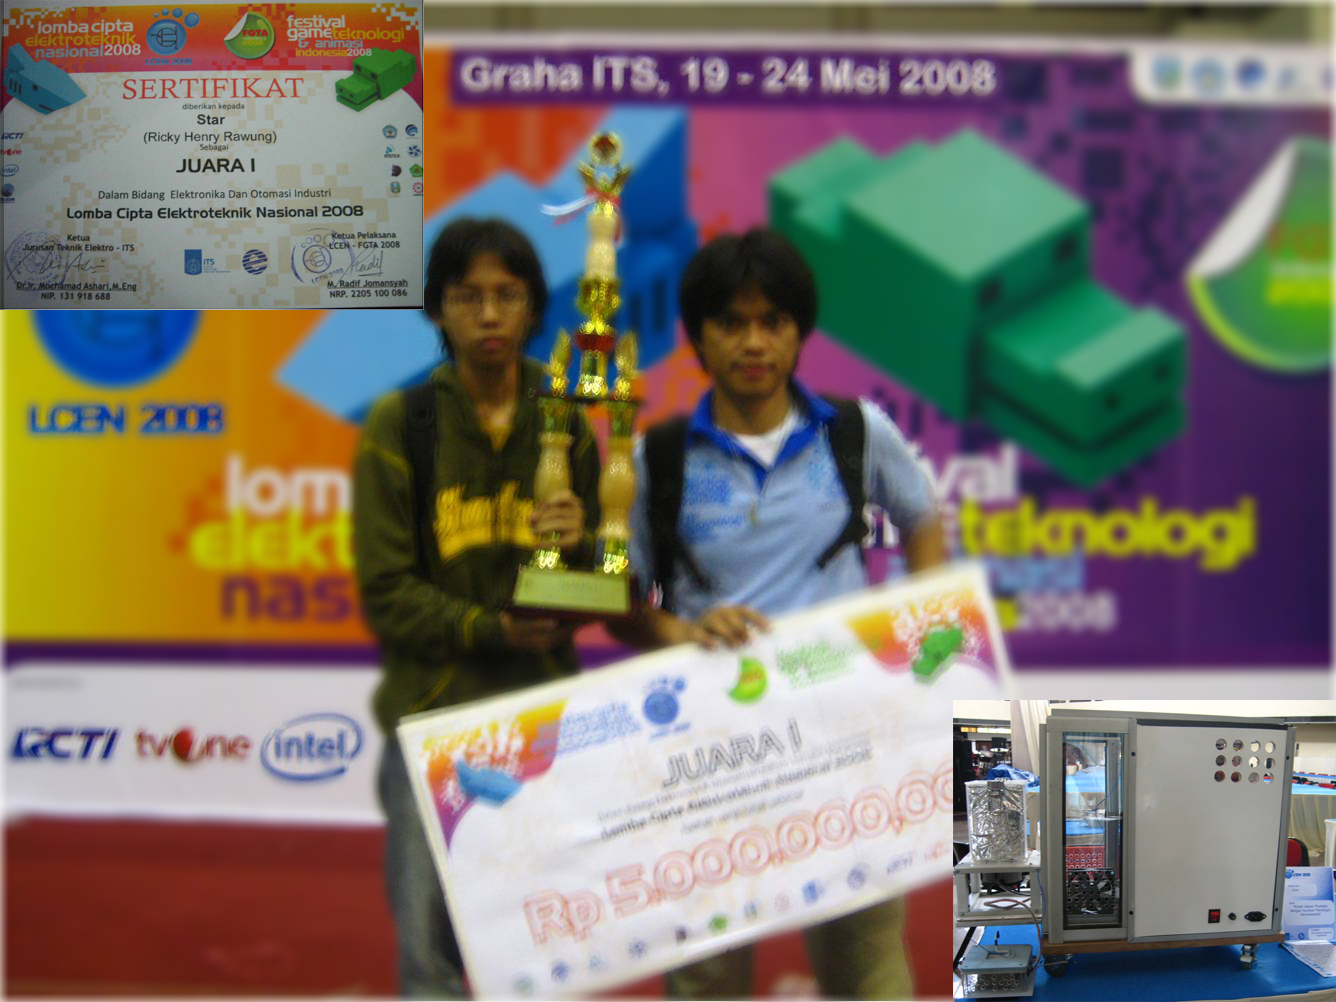 Juara 1 Lomba Cipta Elektroteknik Nasional 2008 | Sains dan Teknologi - Teknik Elektro